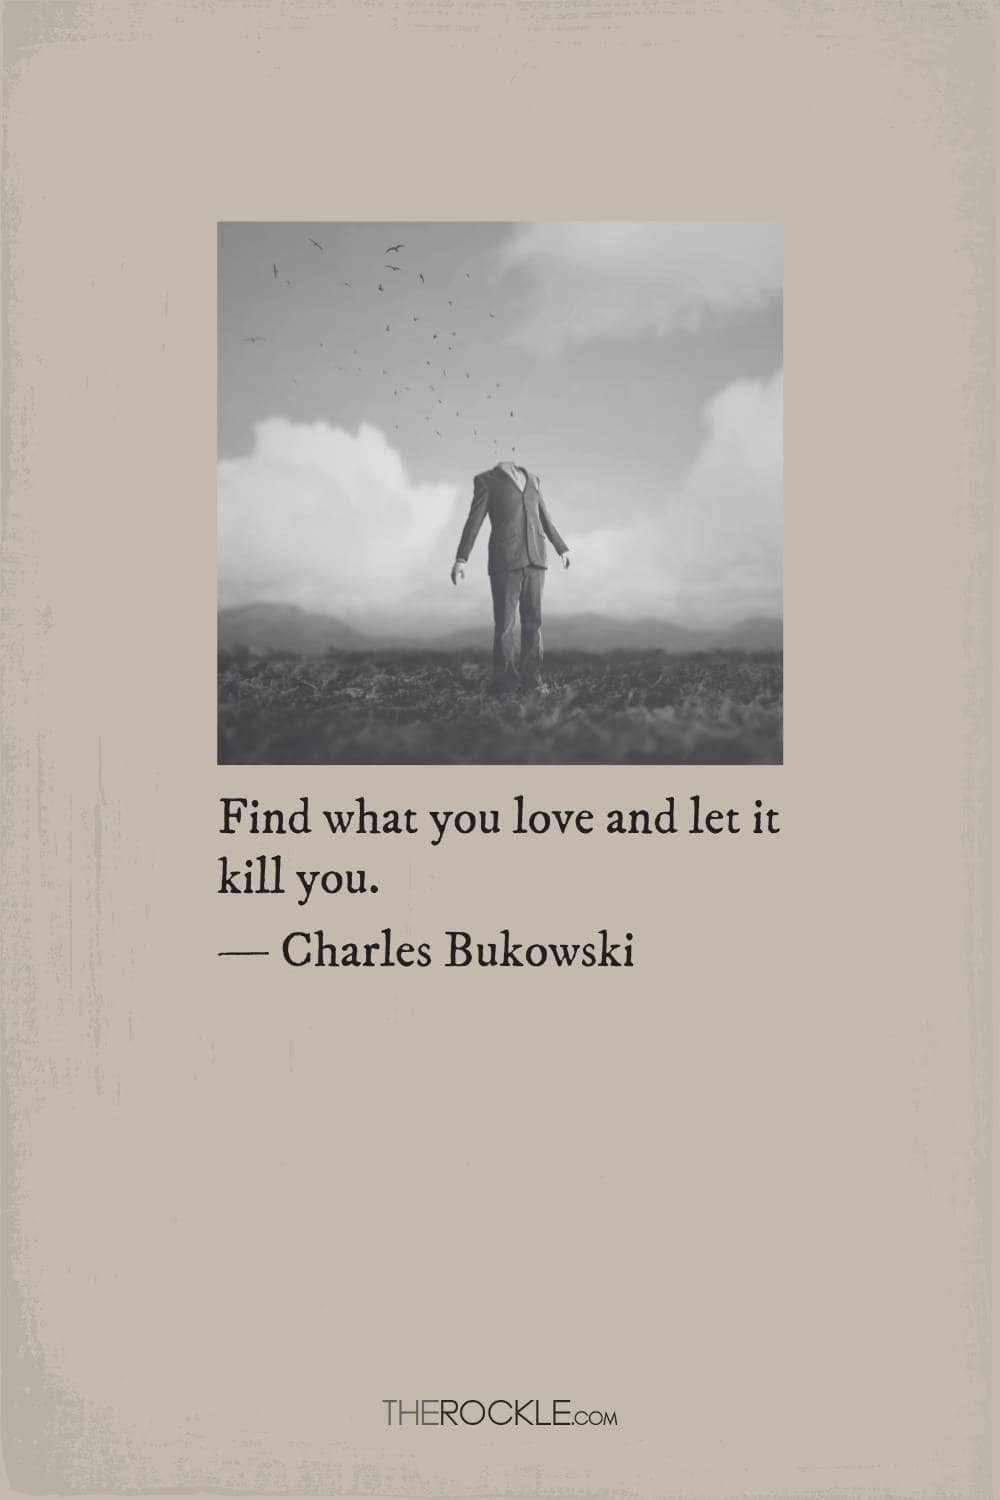 Charles Bukowski's quote on passion